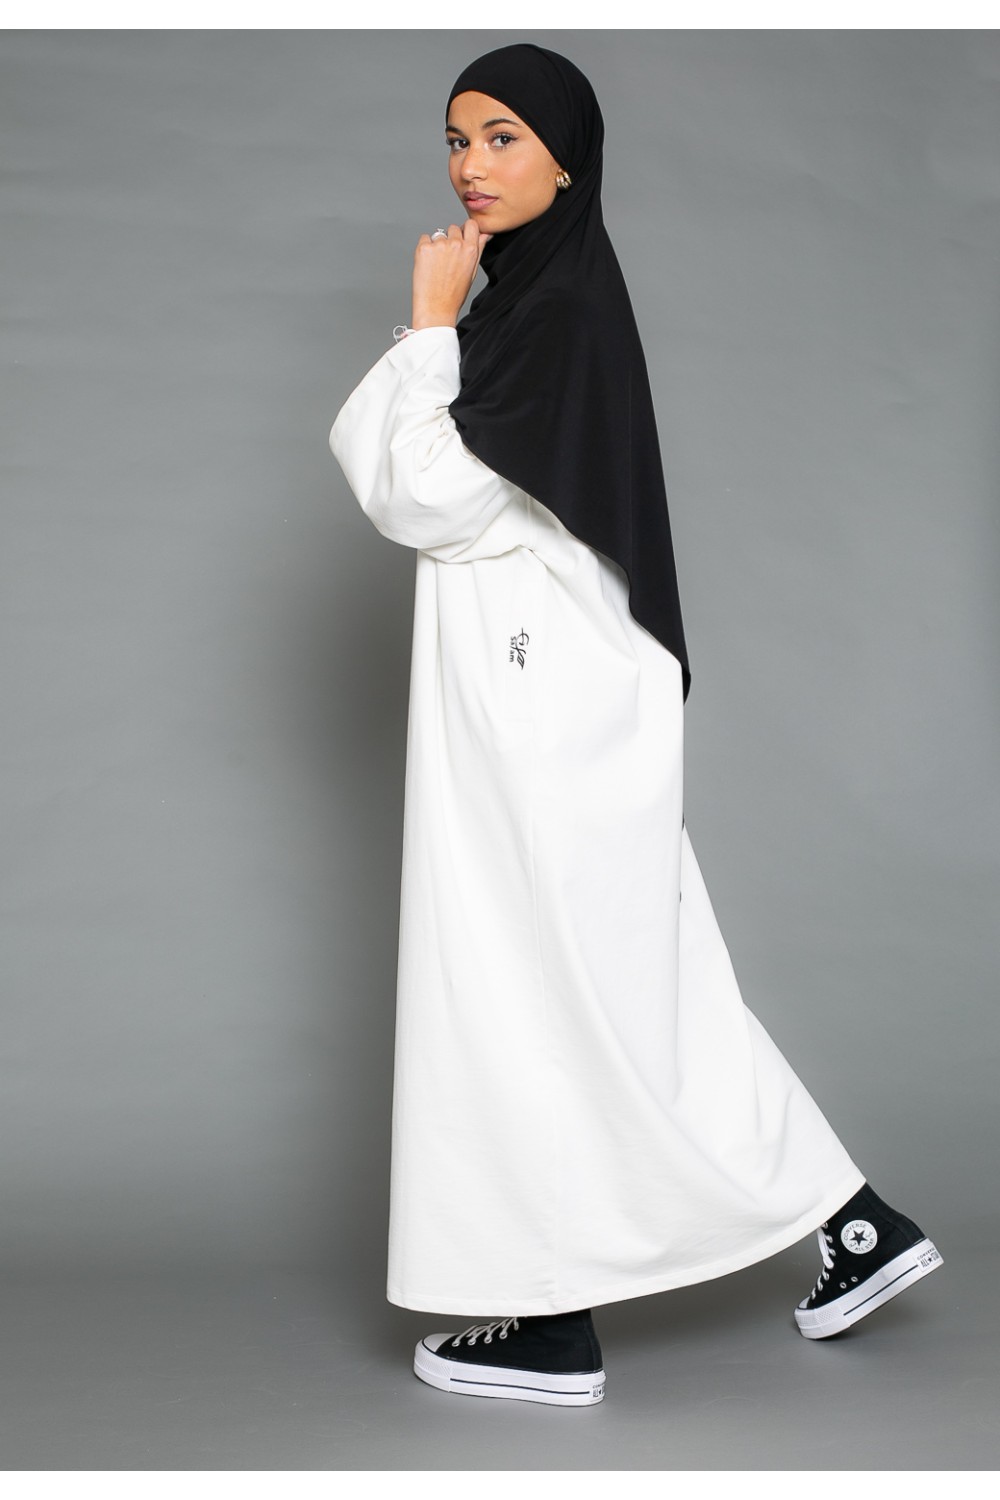 Off-white wide-sleeved oversized sweatshirt dress